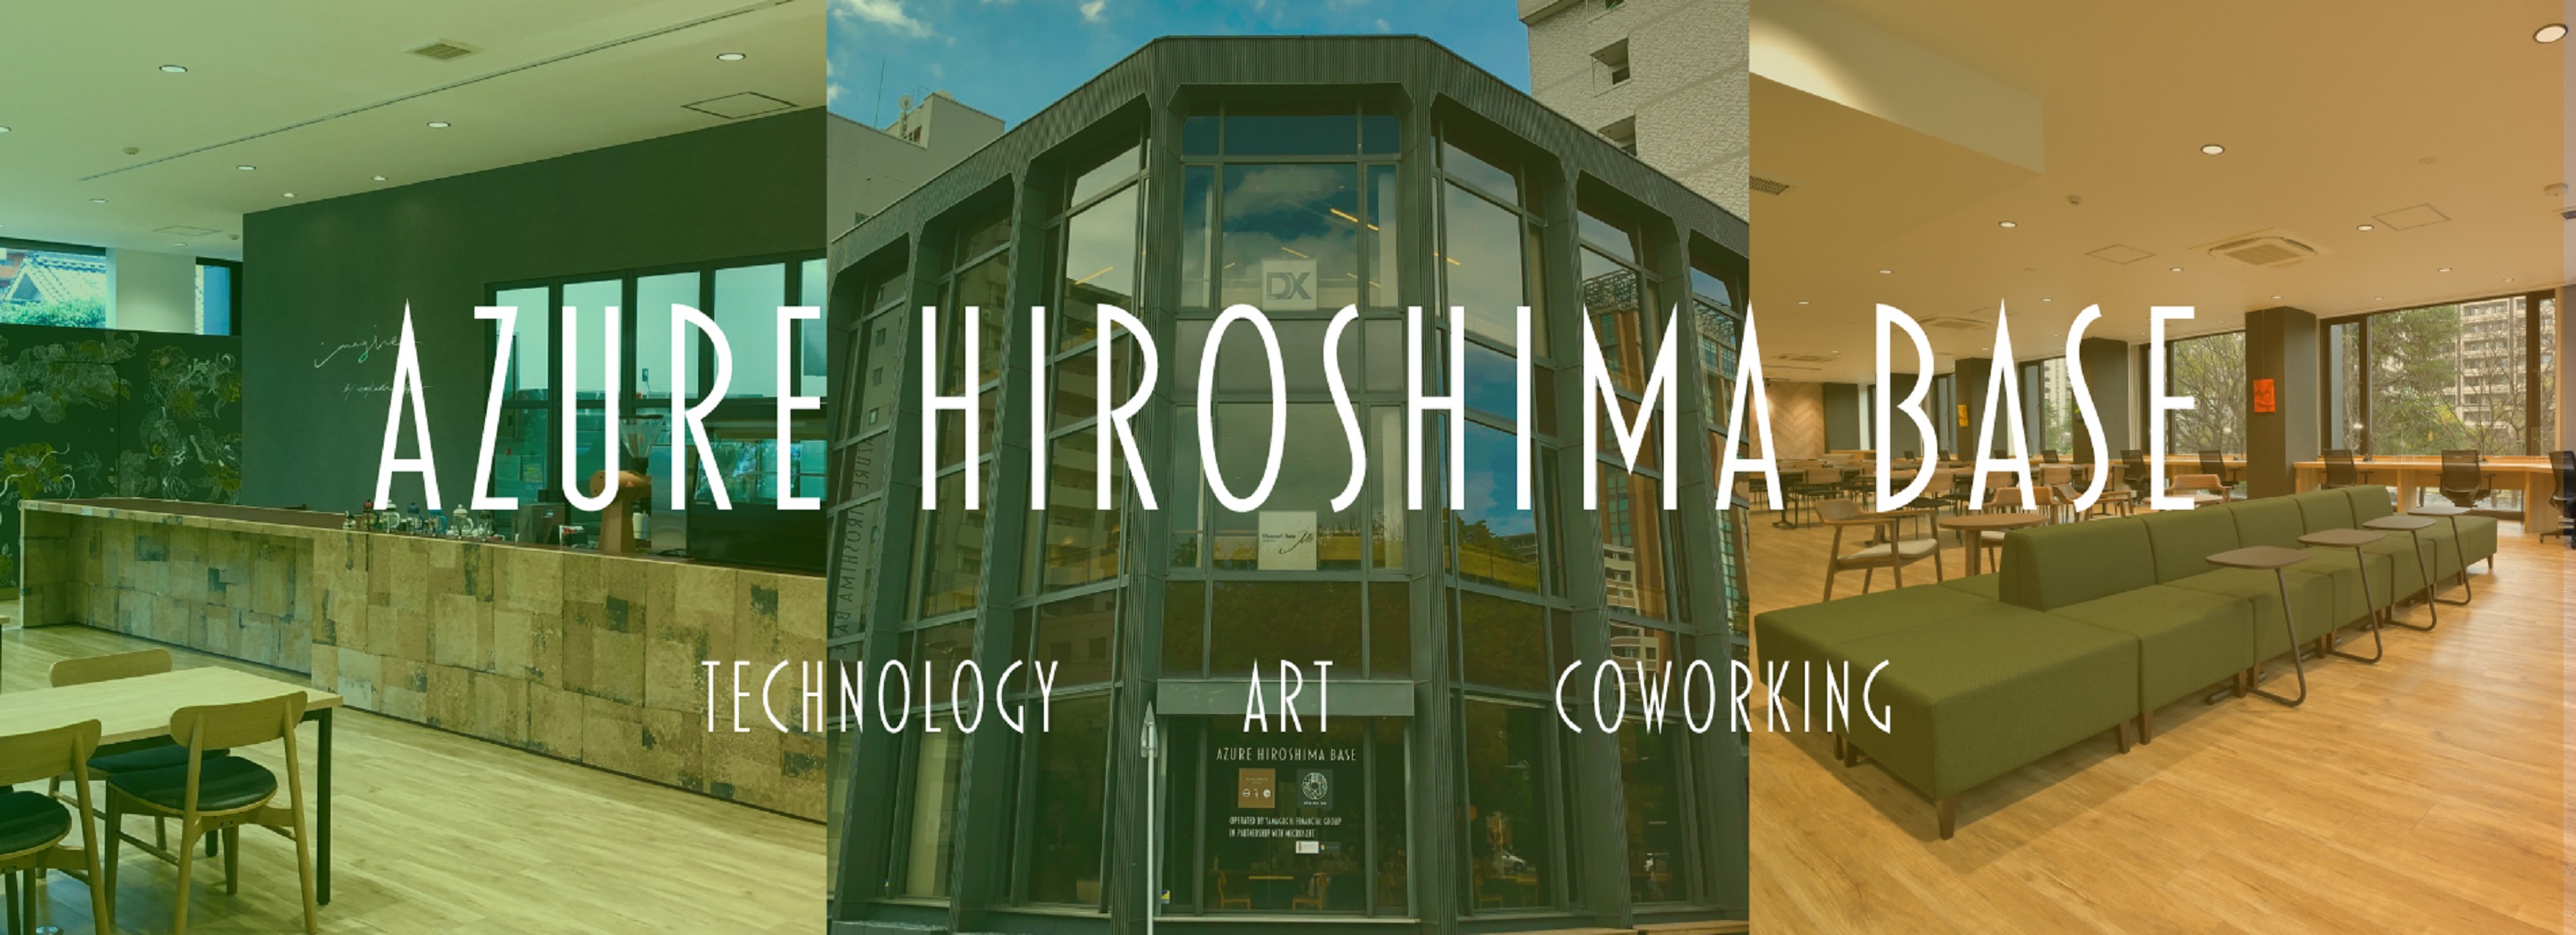 Azure Hiroshima Base | 広島市のコワーキングスペース